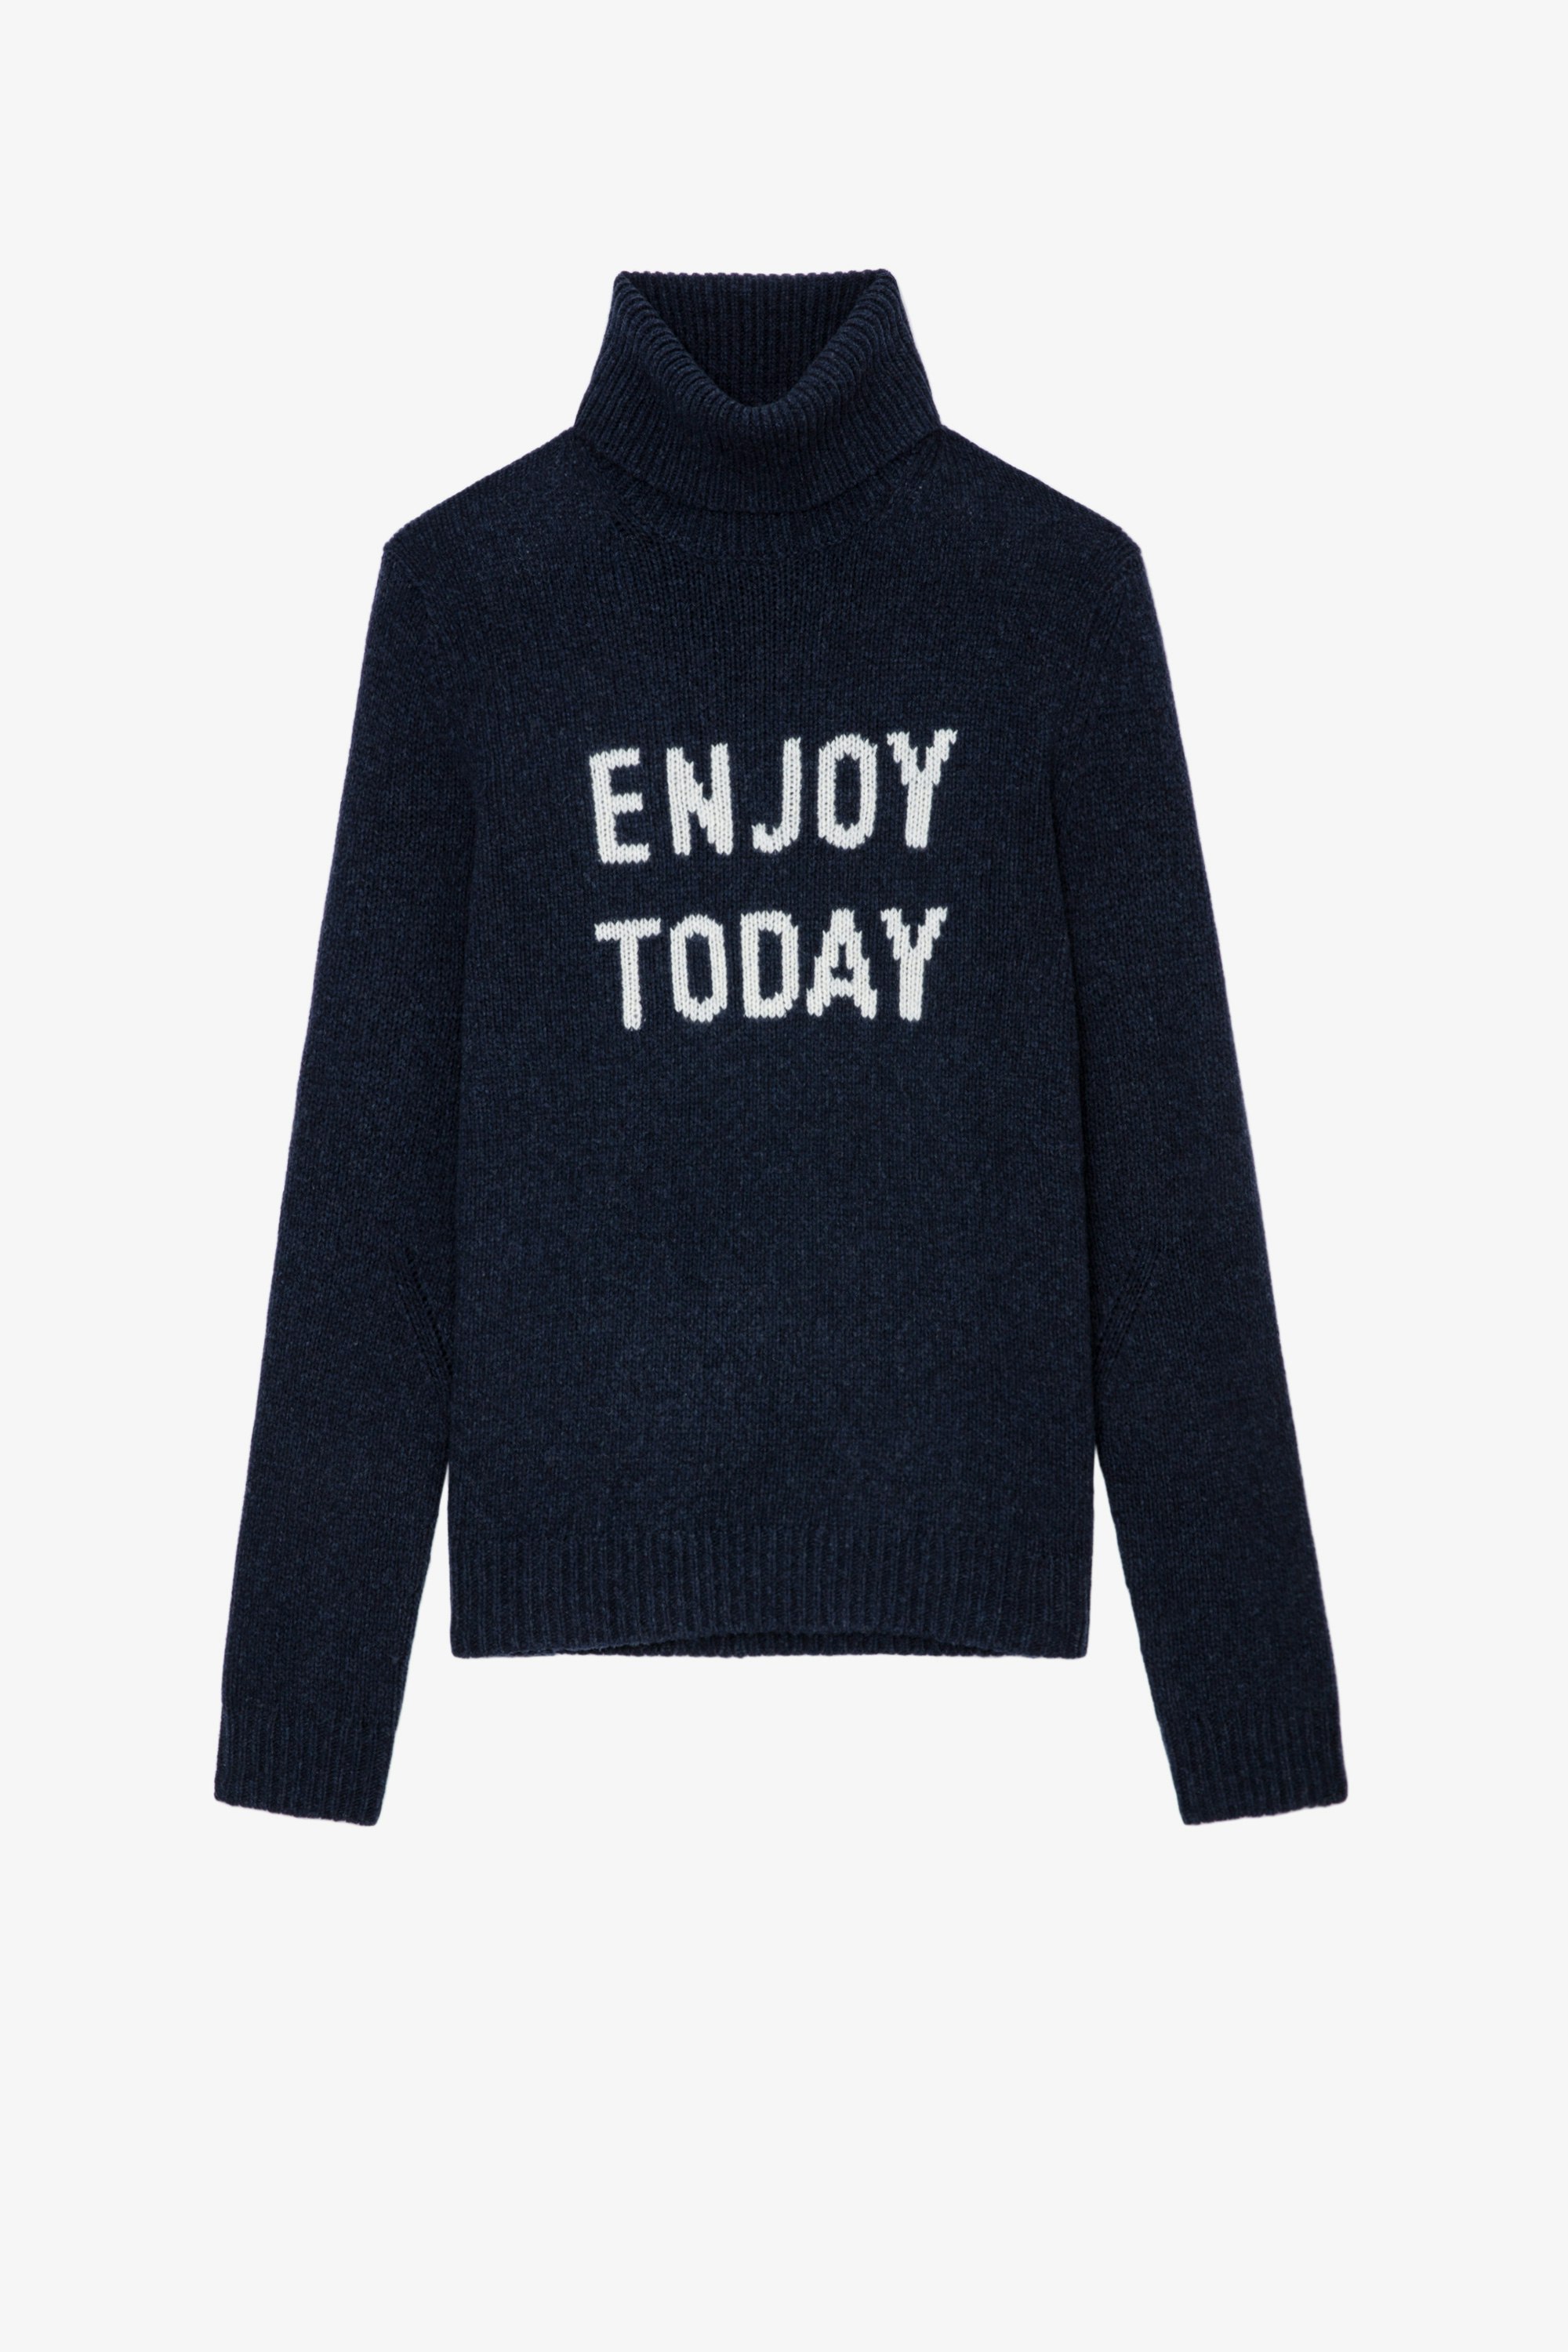 Enjoy Today Bobby ニット Men’s navy blue wool turtleneck jumper with ‘Enjoy today’ inscription